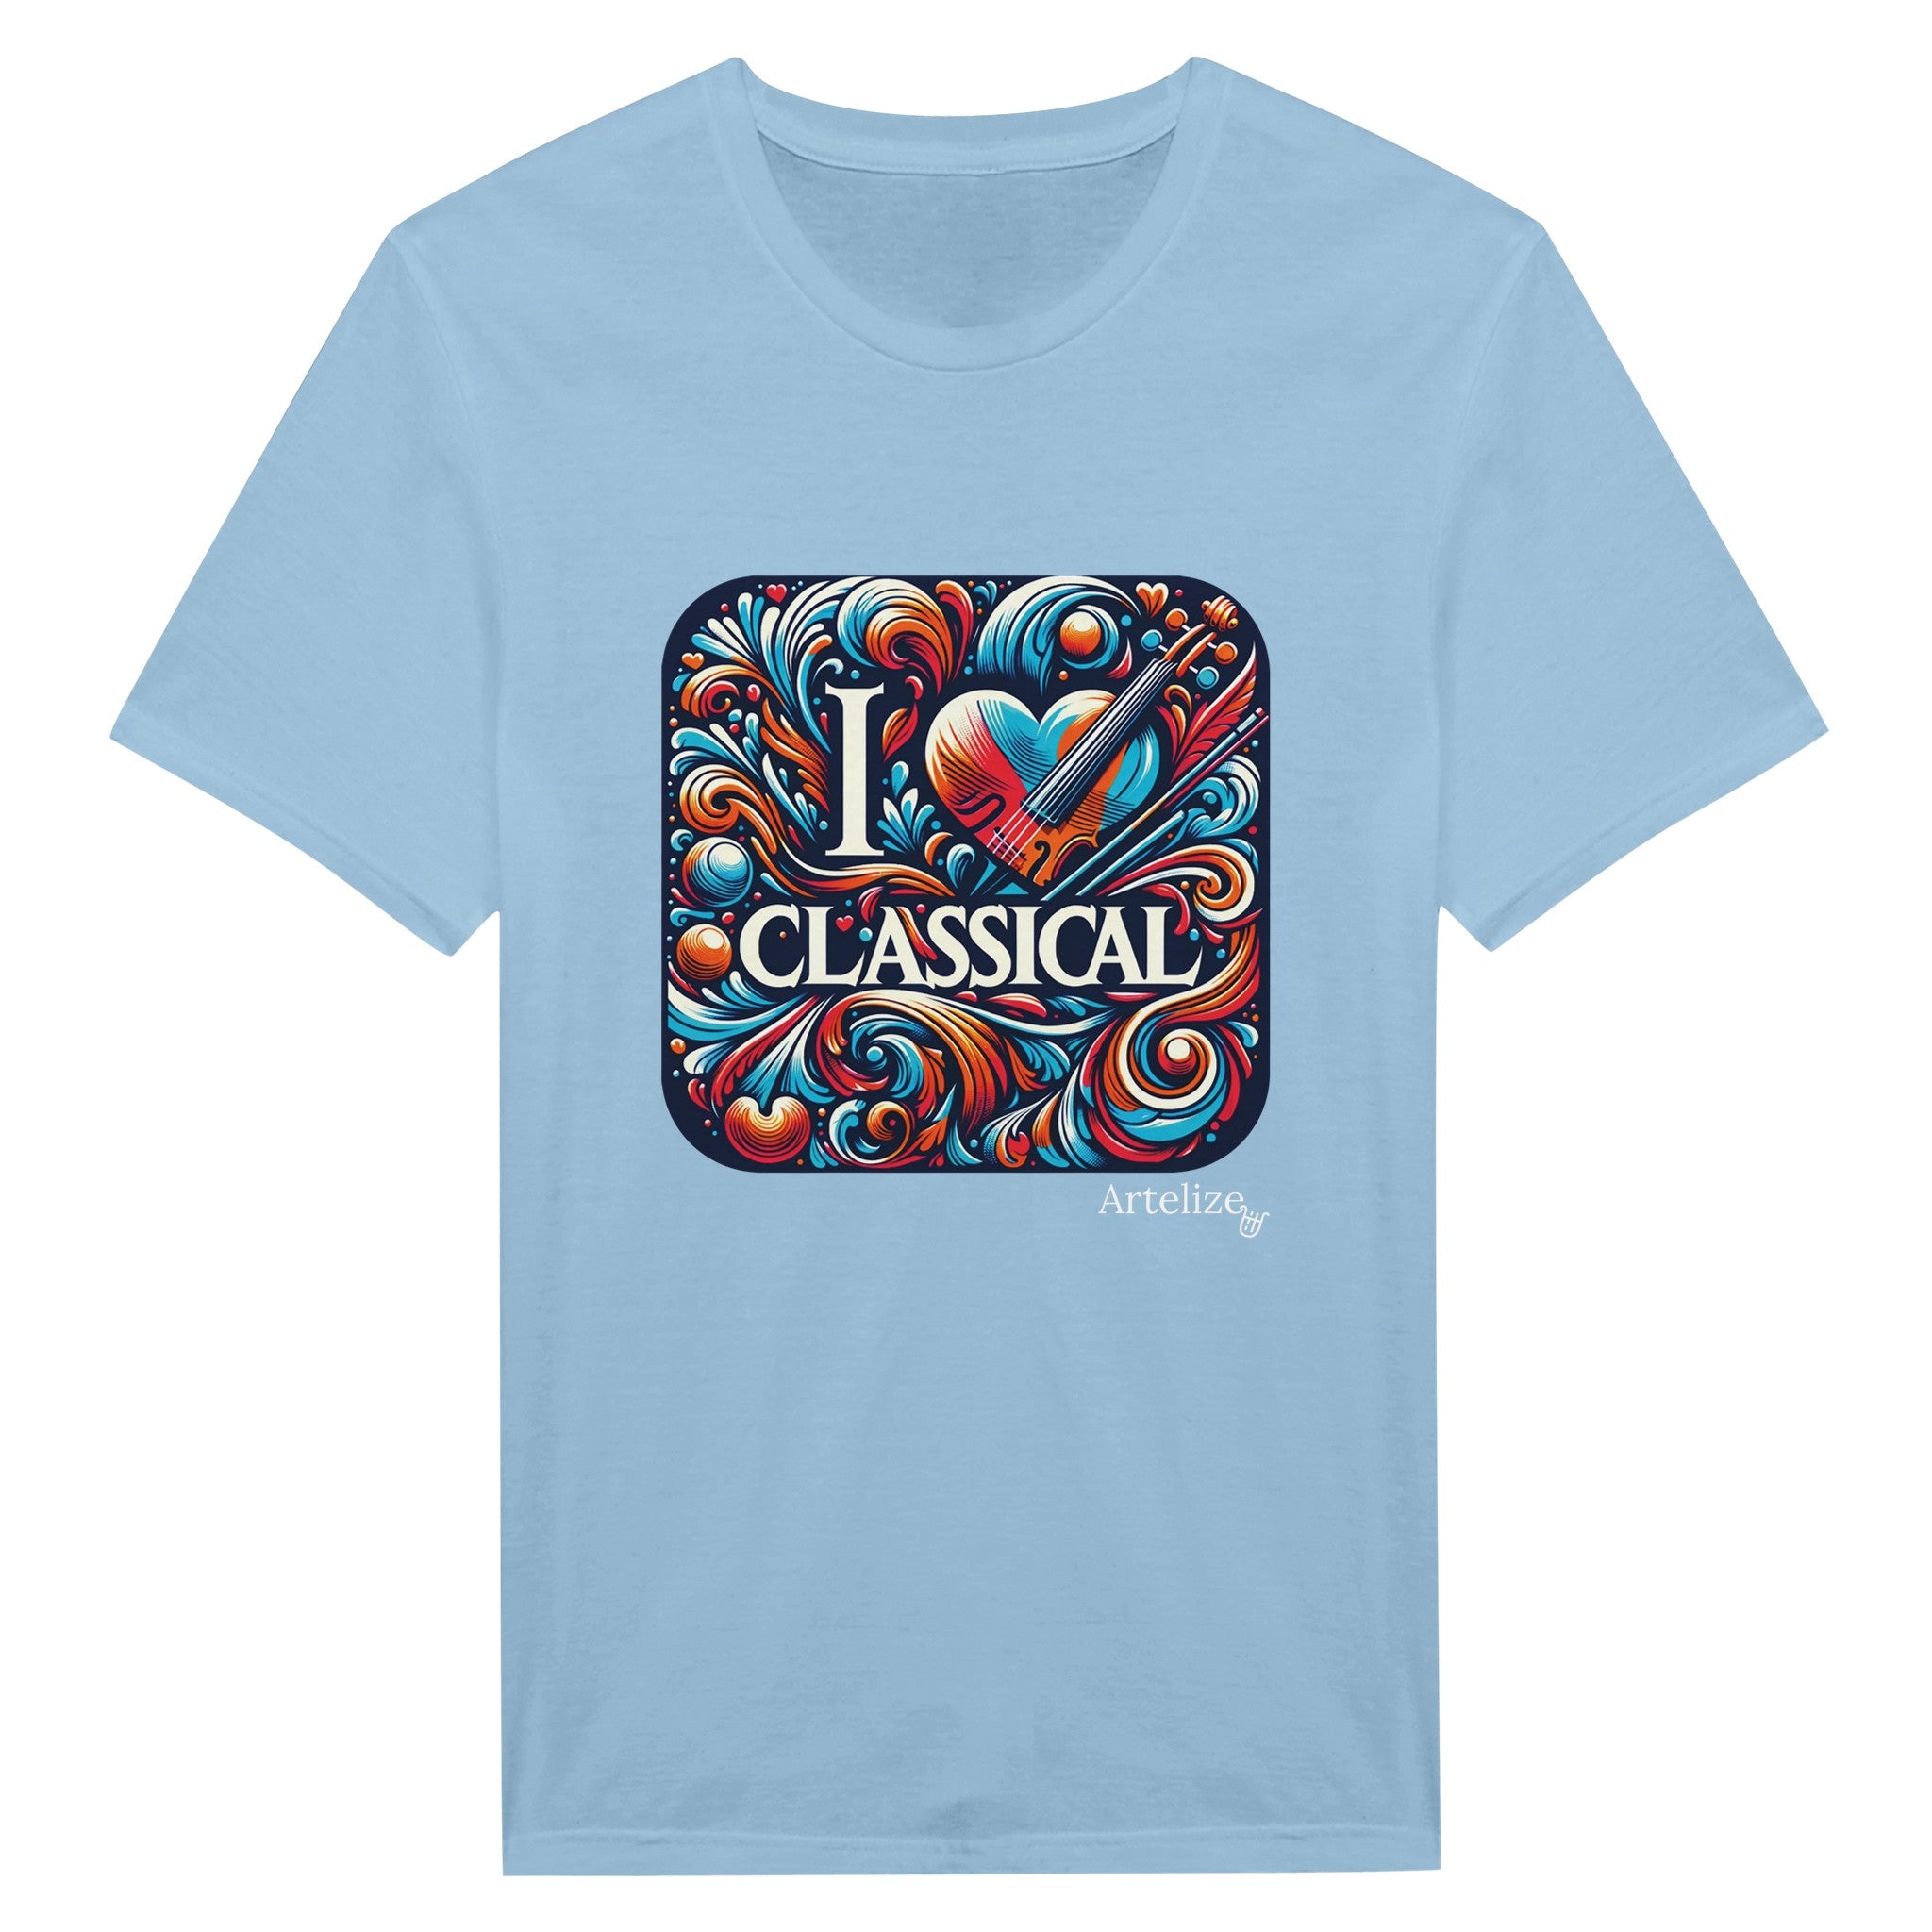 "I LOVE CLASSICAL" Classic Unisex Crewneck T-shirt